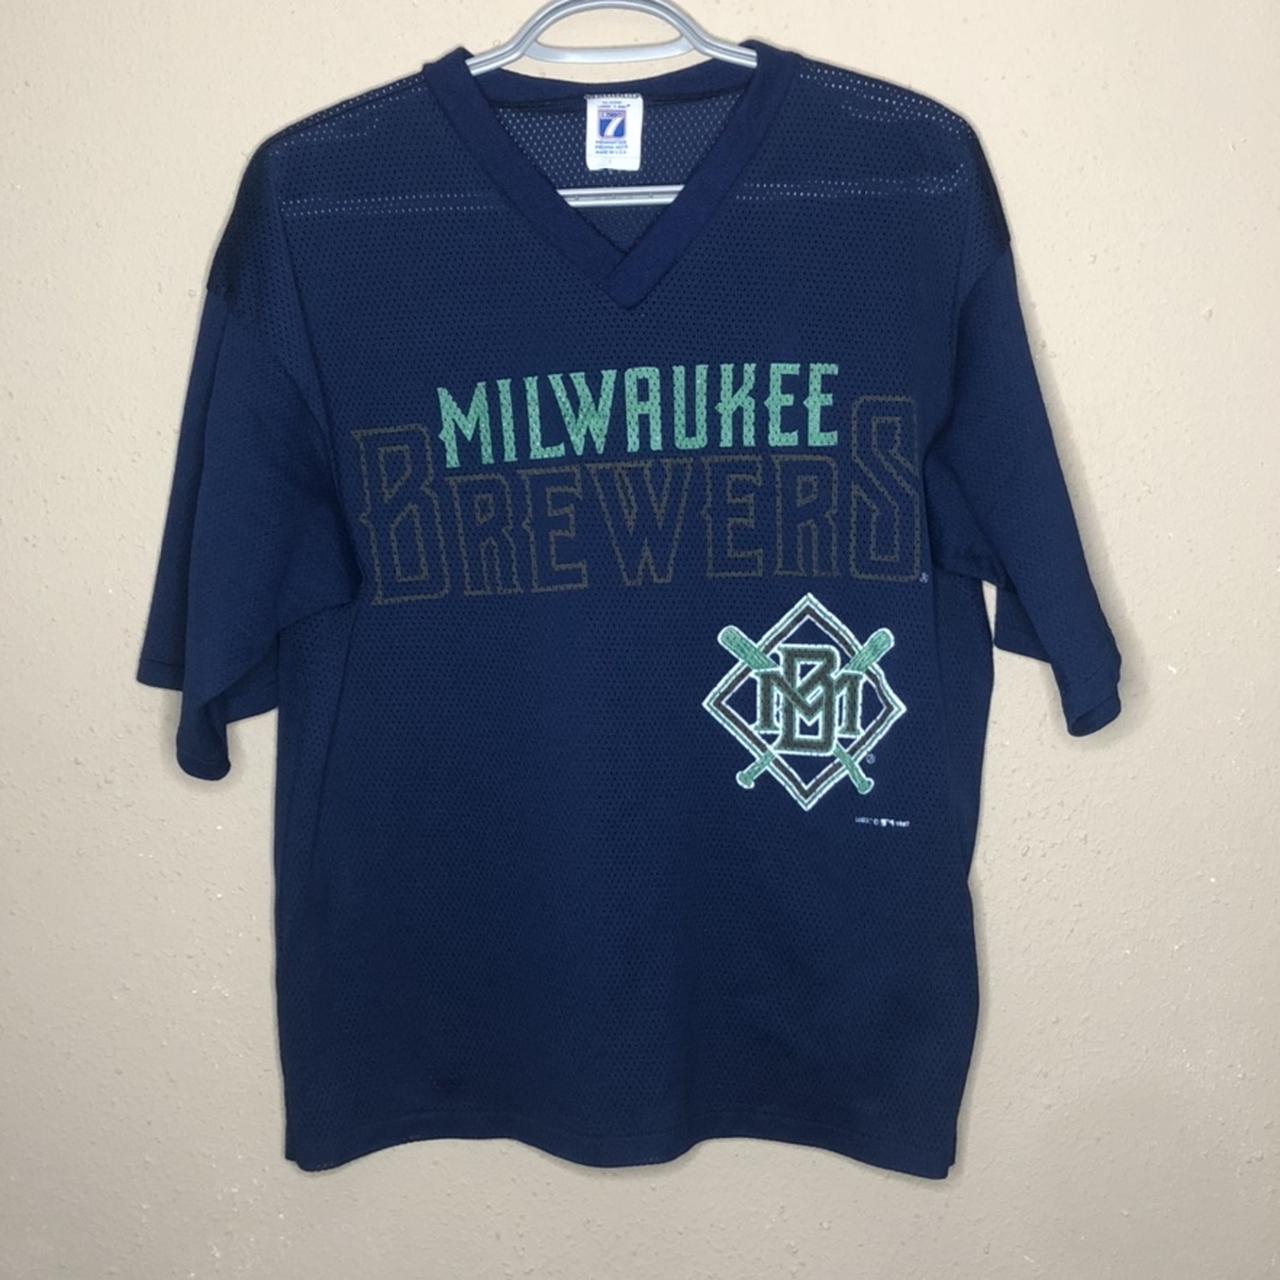 Vintage Milwaukee Brewers Jersey. In great - Depop